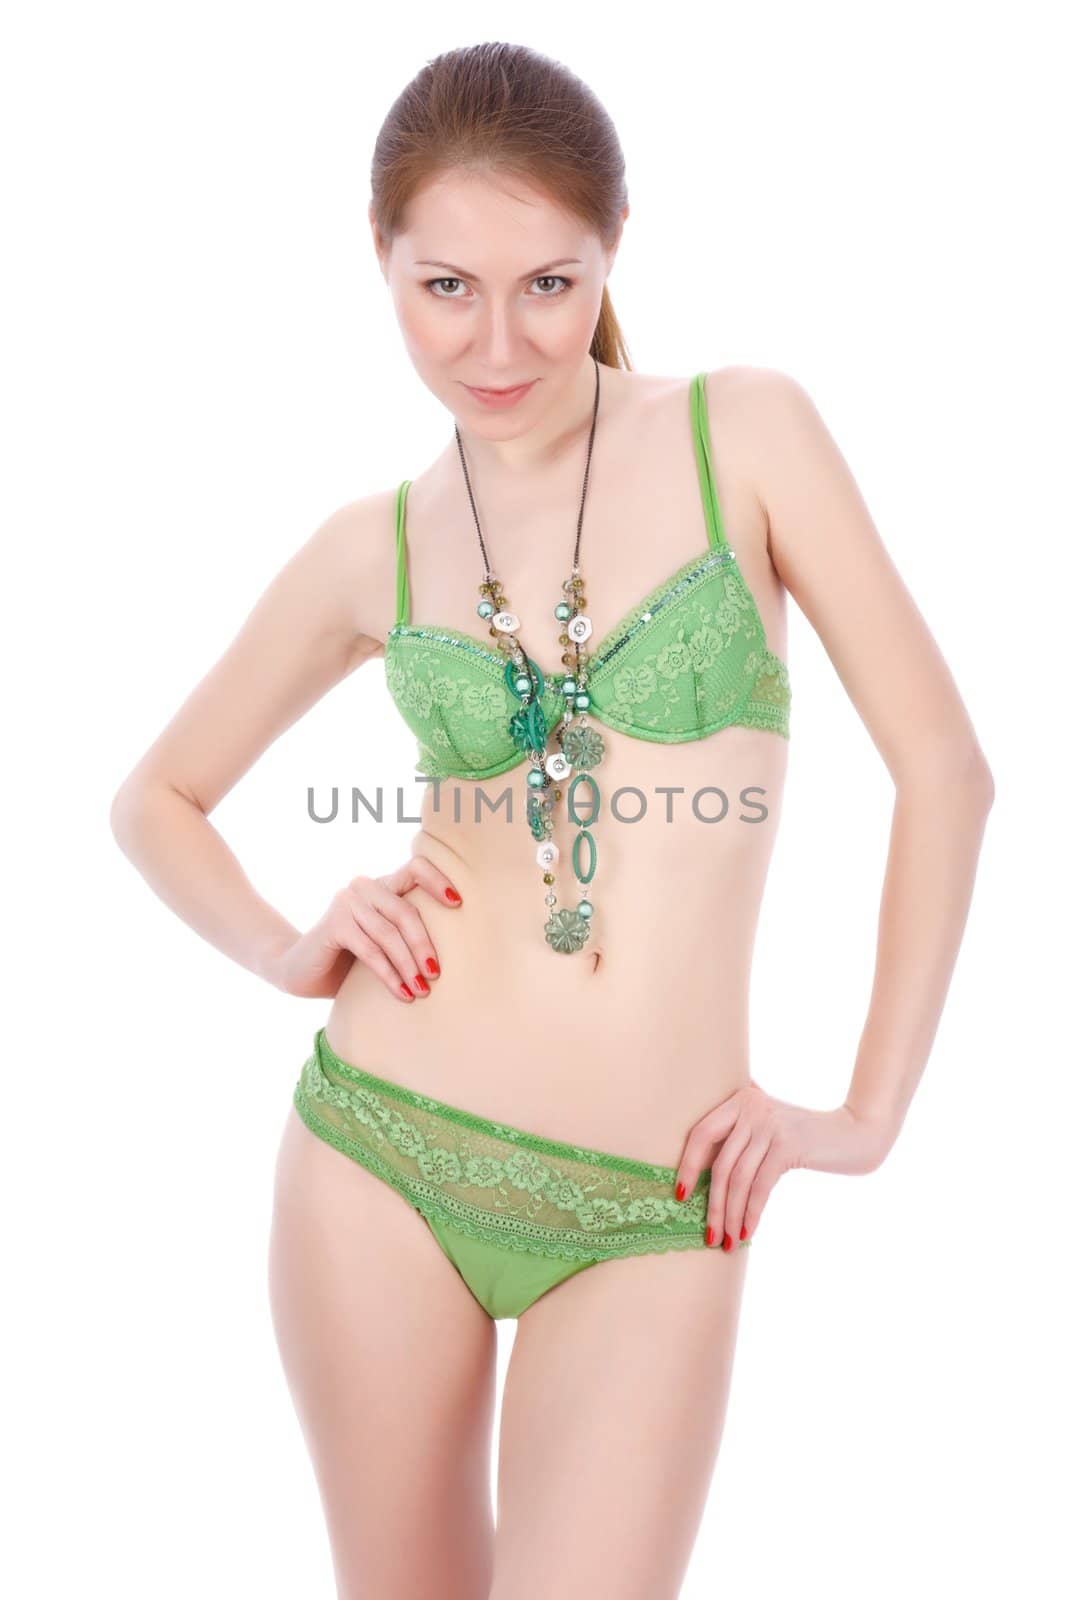 Slim attractive female in green lingerie.